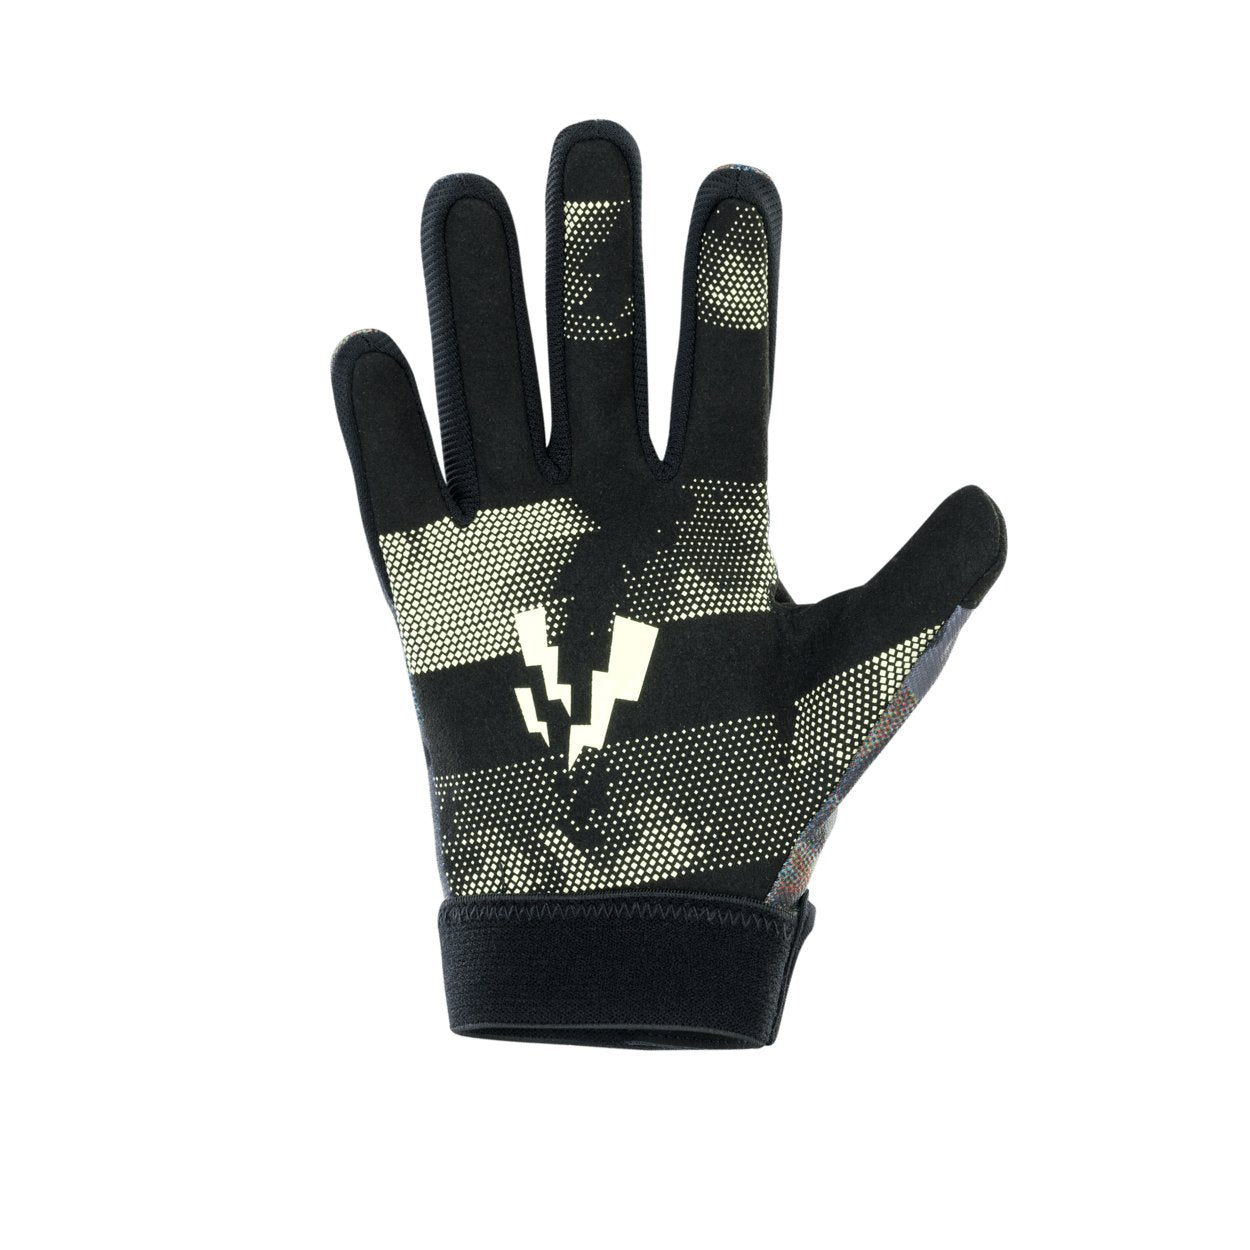 ION Youth MTB Gloves Scrub 2022 - Worthing Watersports - 9010583029160 - Gloves - ION Bike